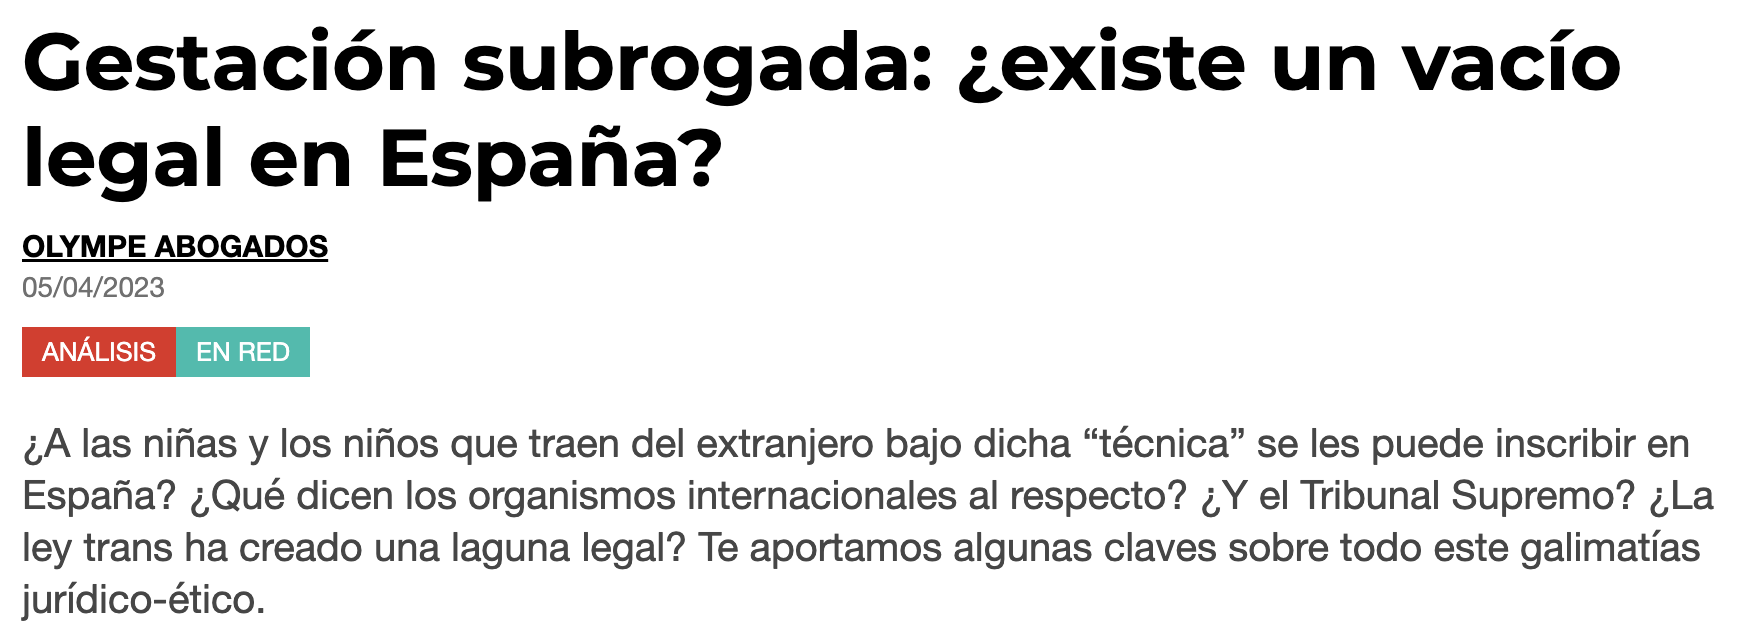 Pikara Magazine: "Gestación subrogada: ¿existe un vacío legal en España?"